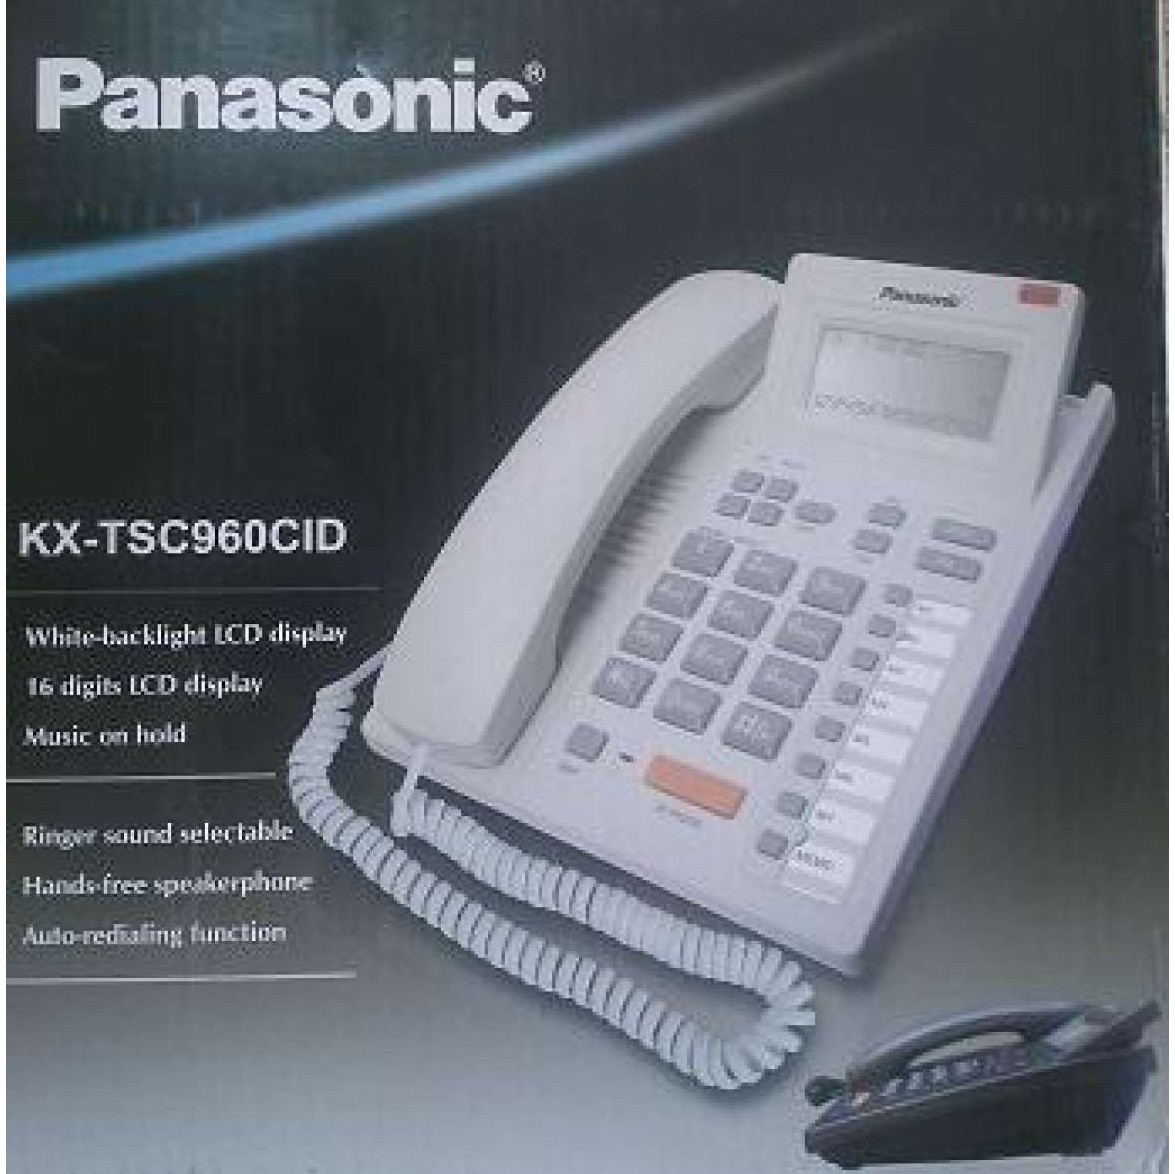 Panasonic Landline Phone KX-TSC960CID - White